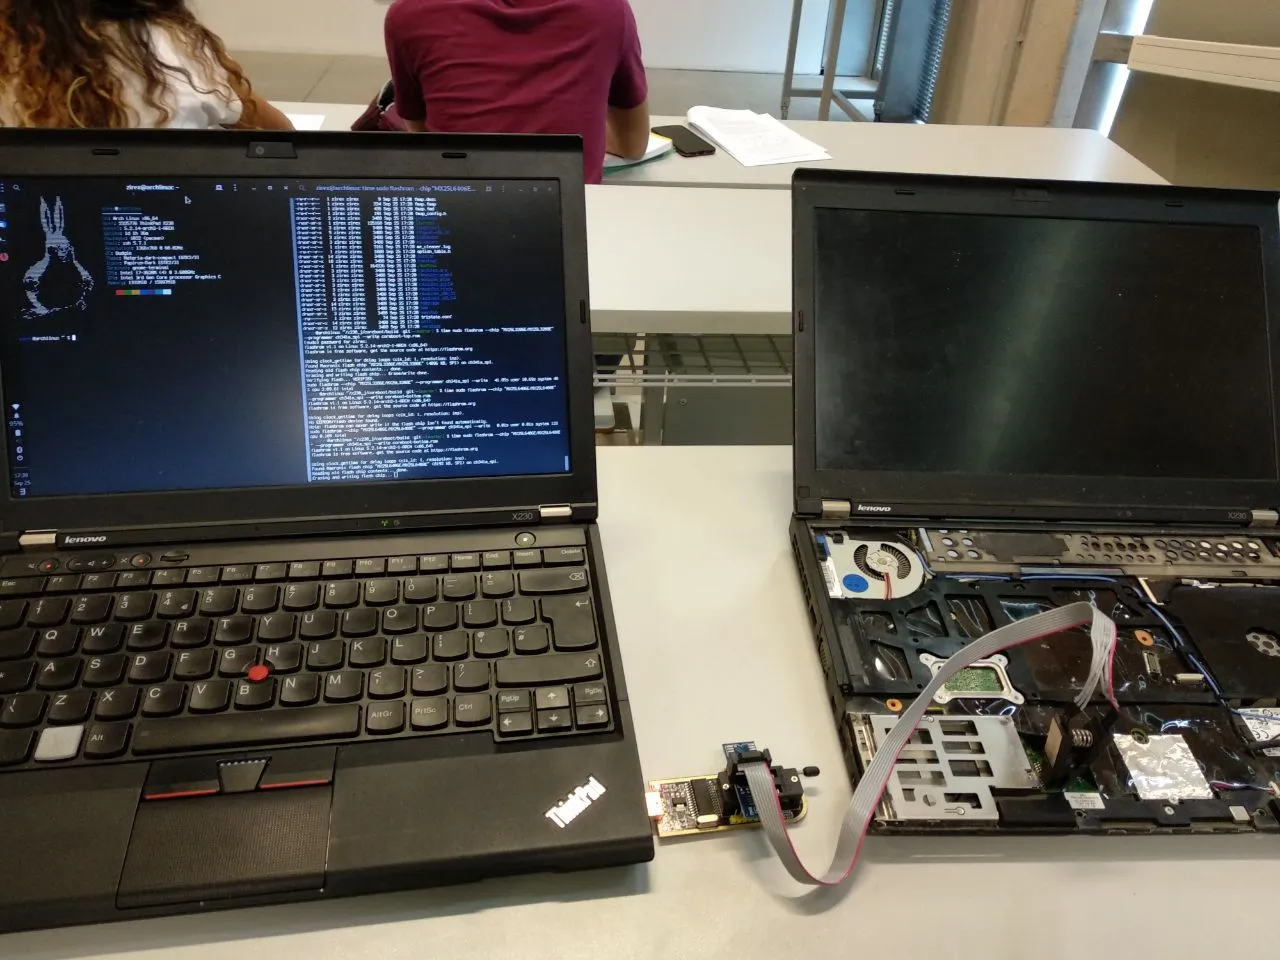 Installing Coreboot open firmware into a Thinkpad x230